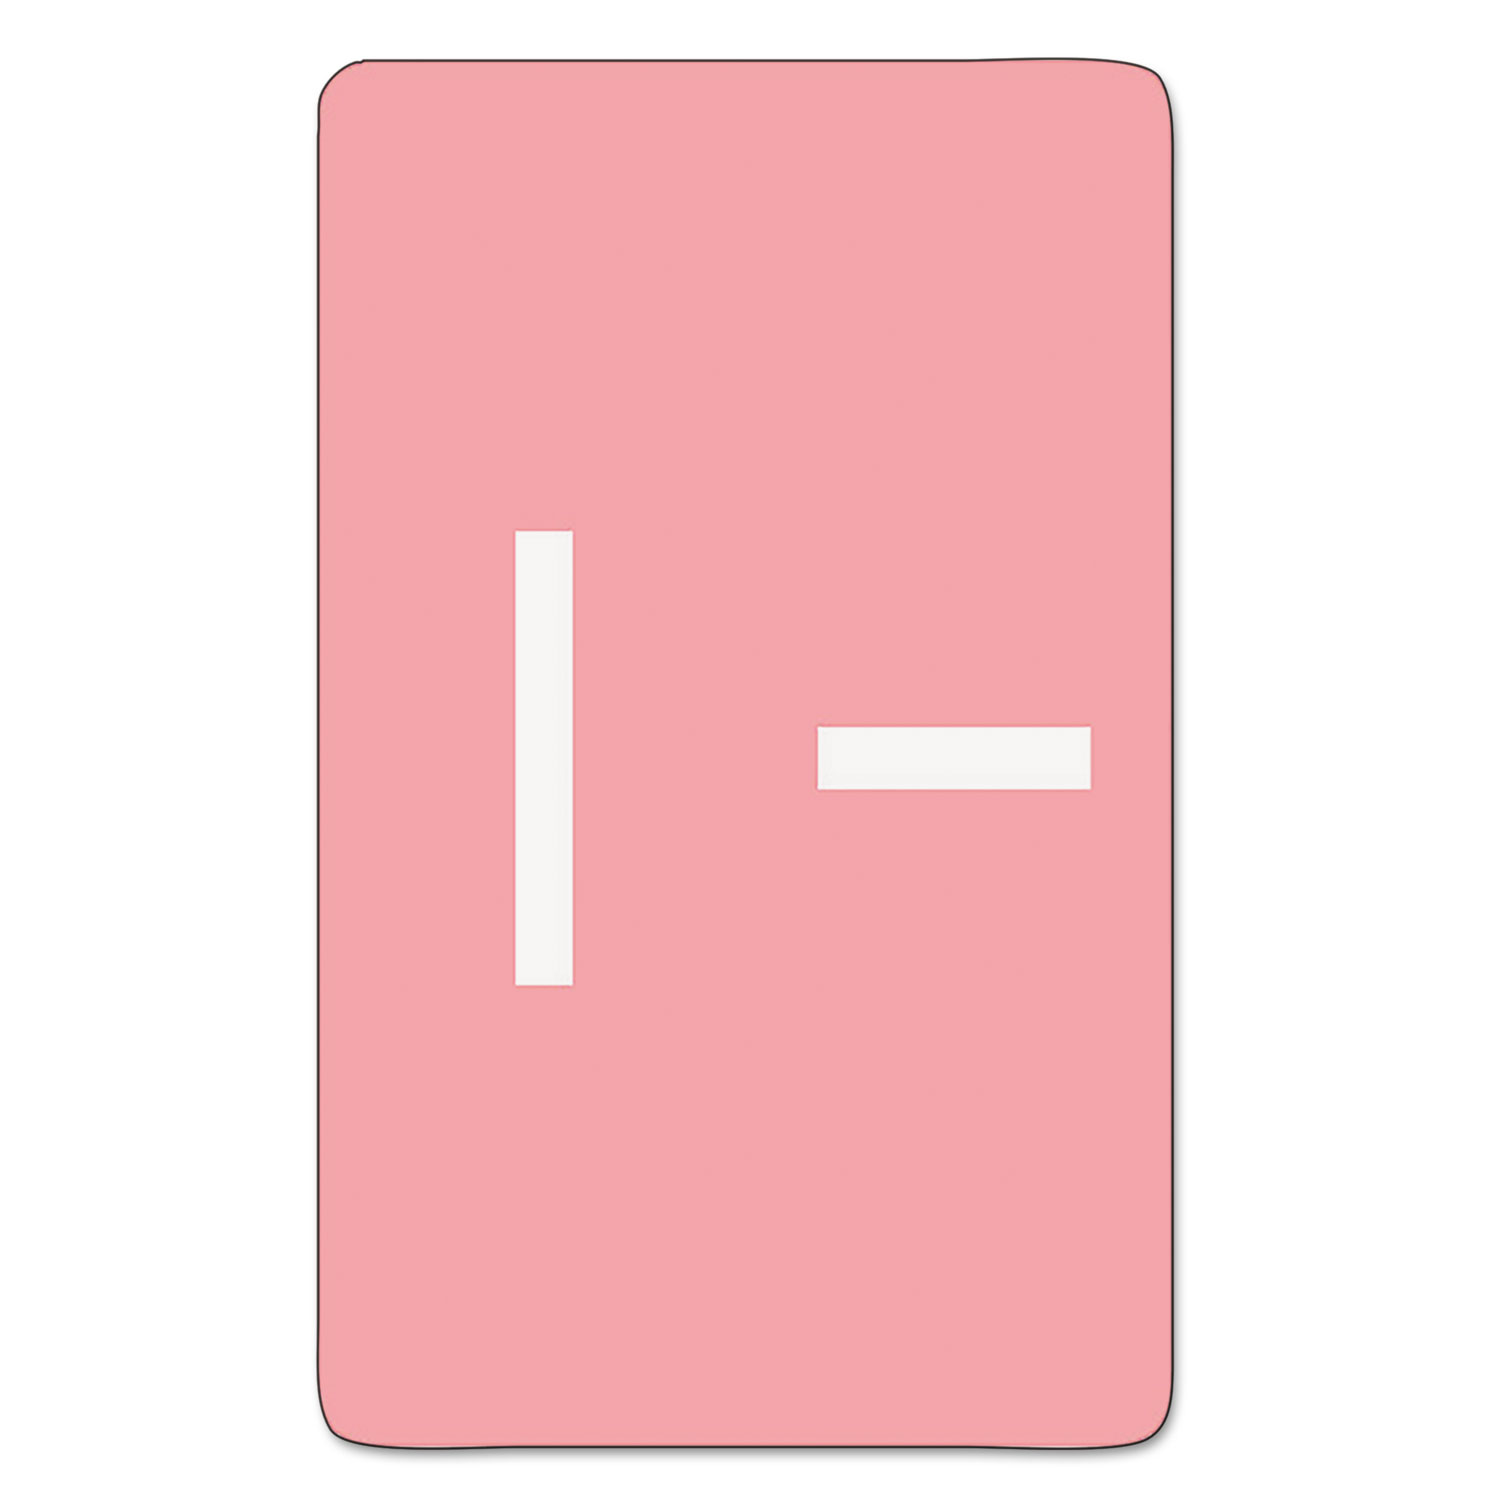  Smead 67179 AlphaZ Color-Coded Second Letter Alphabetical Labels, I, 1 x 1.63, Pink, 10/Sheet, 10 Sheets/Pack (SMD67179) 